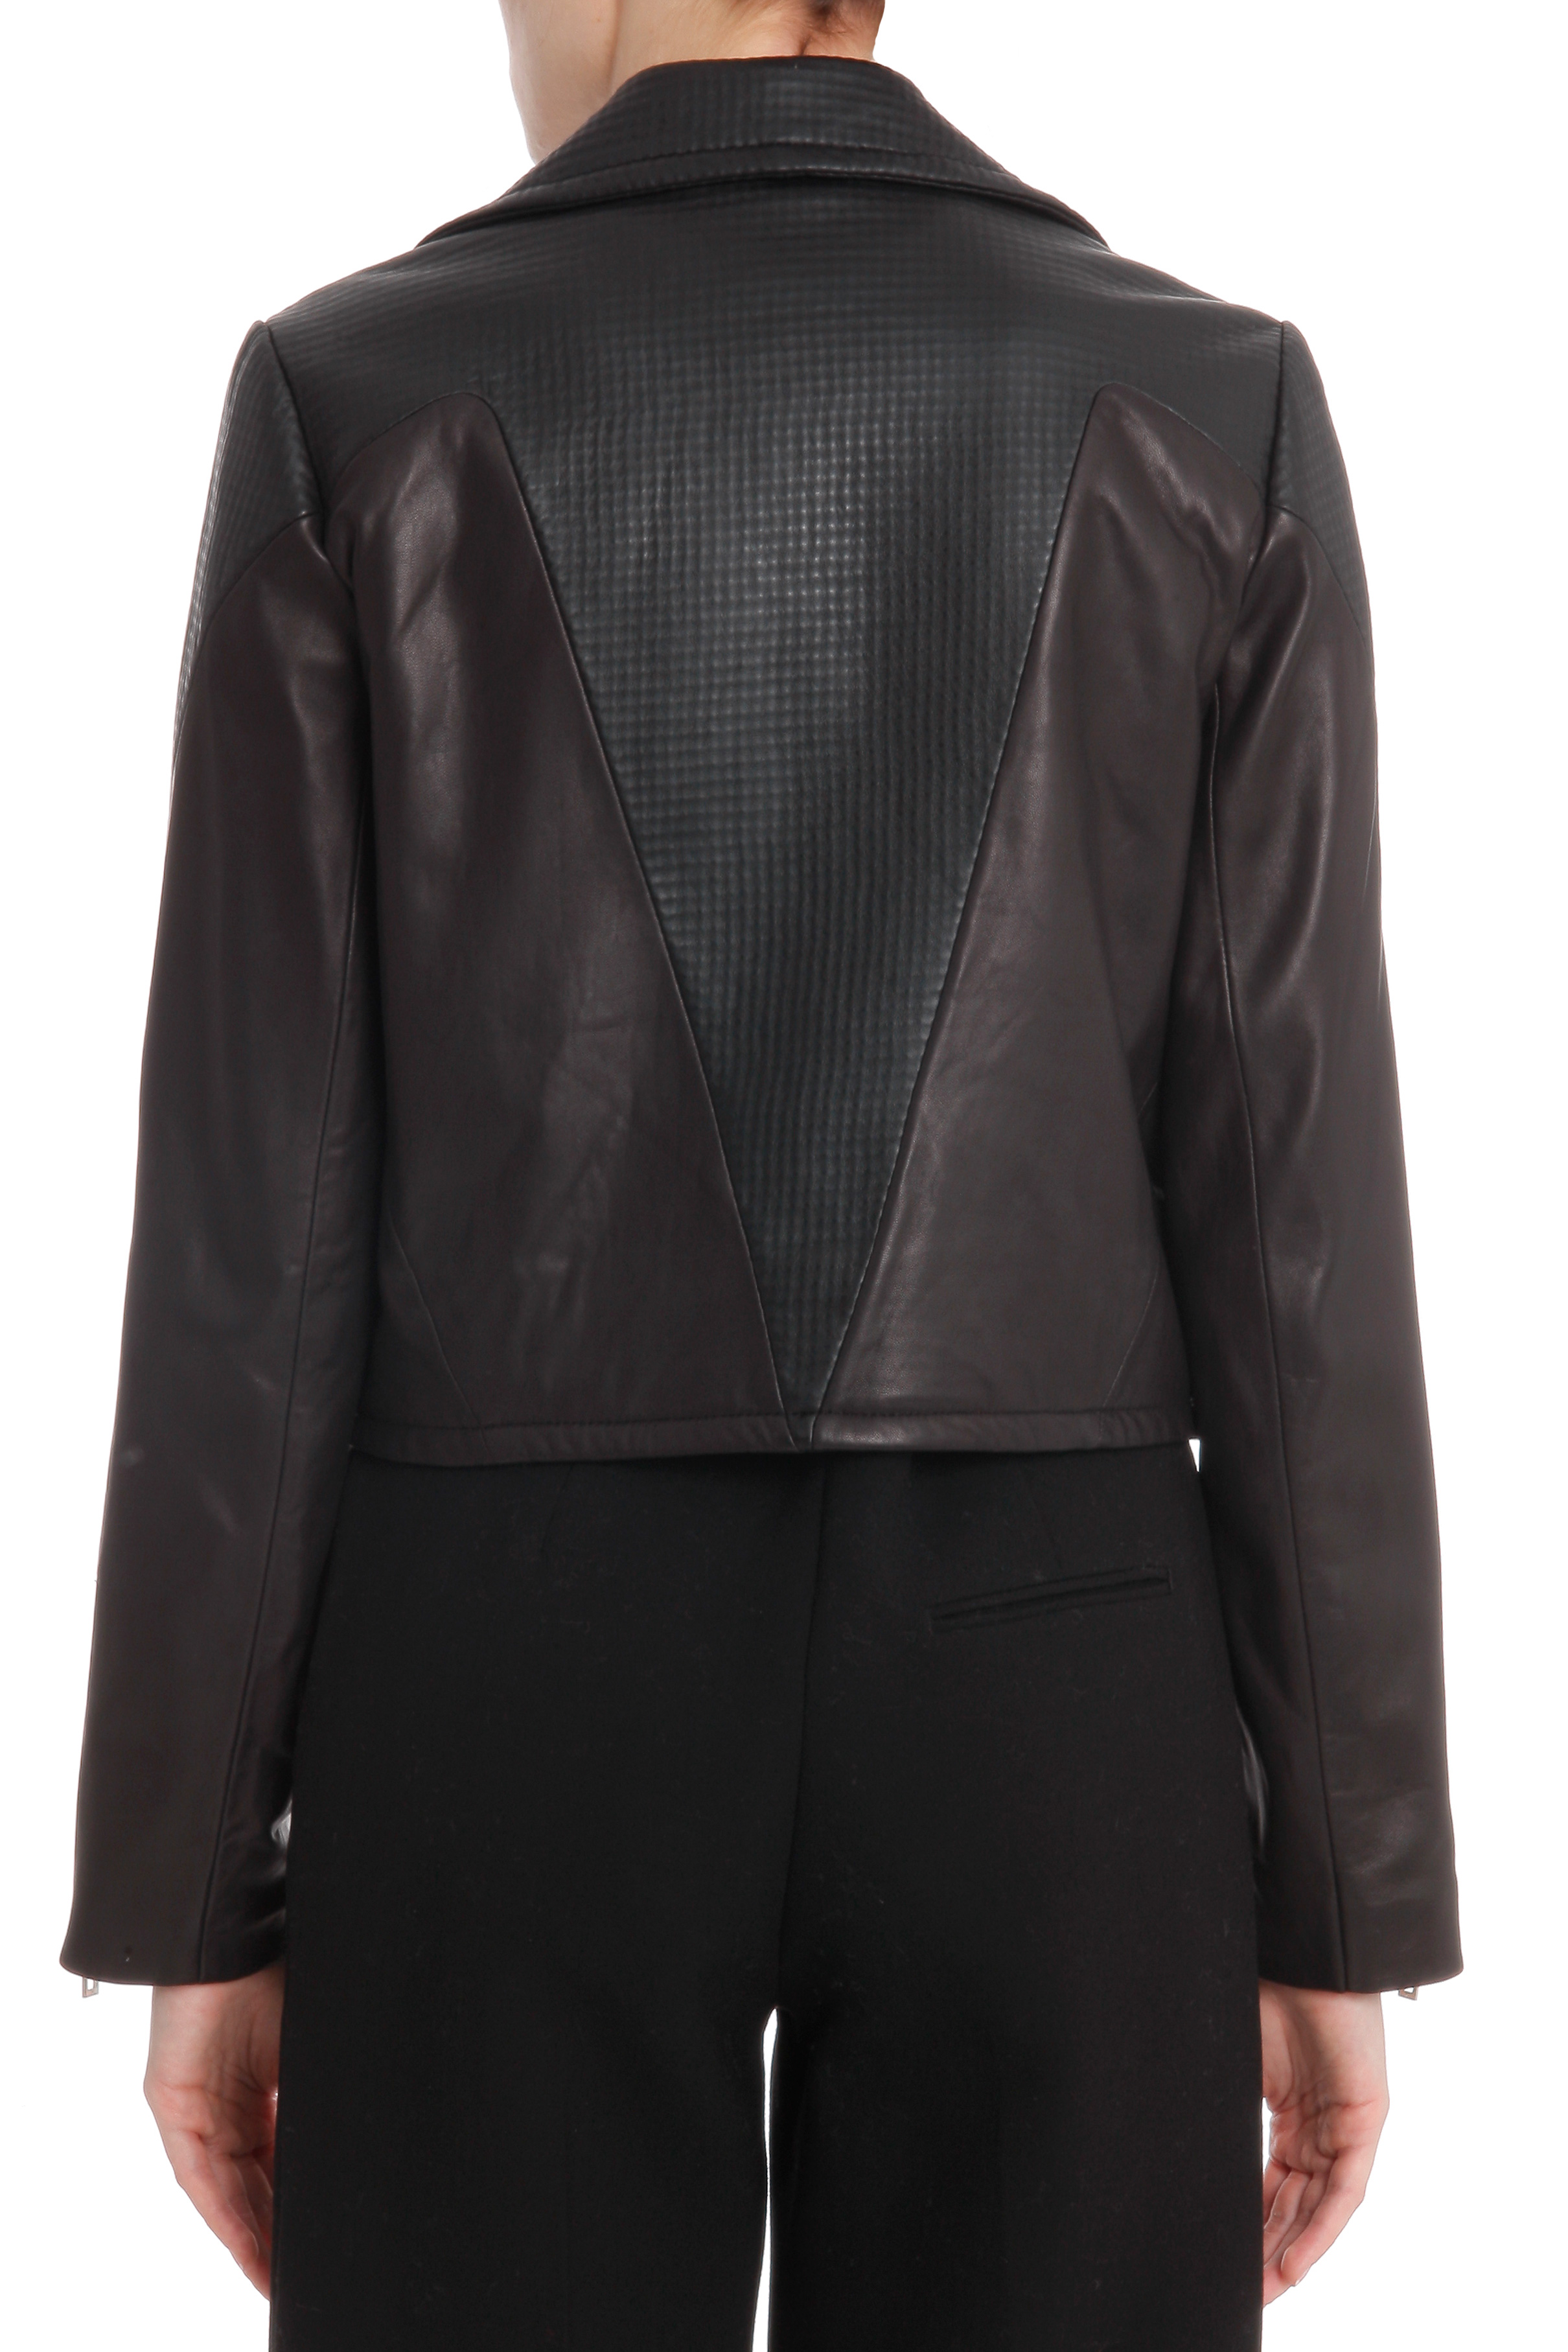 Lyst - Rag & Bone Hudson Leather Biker Jacket in Black